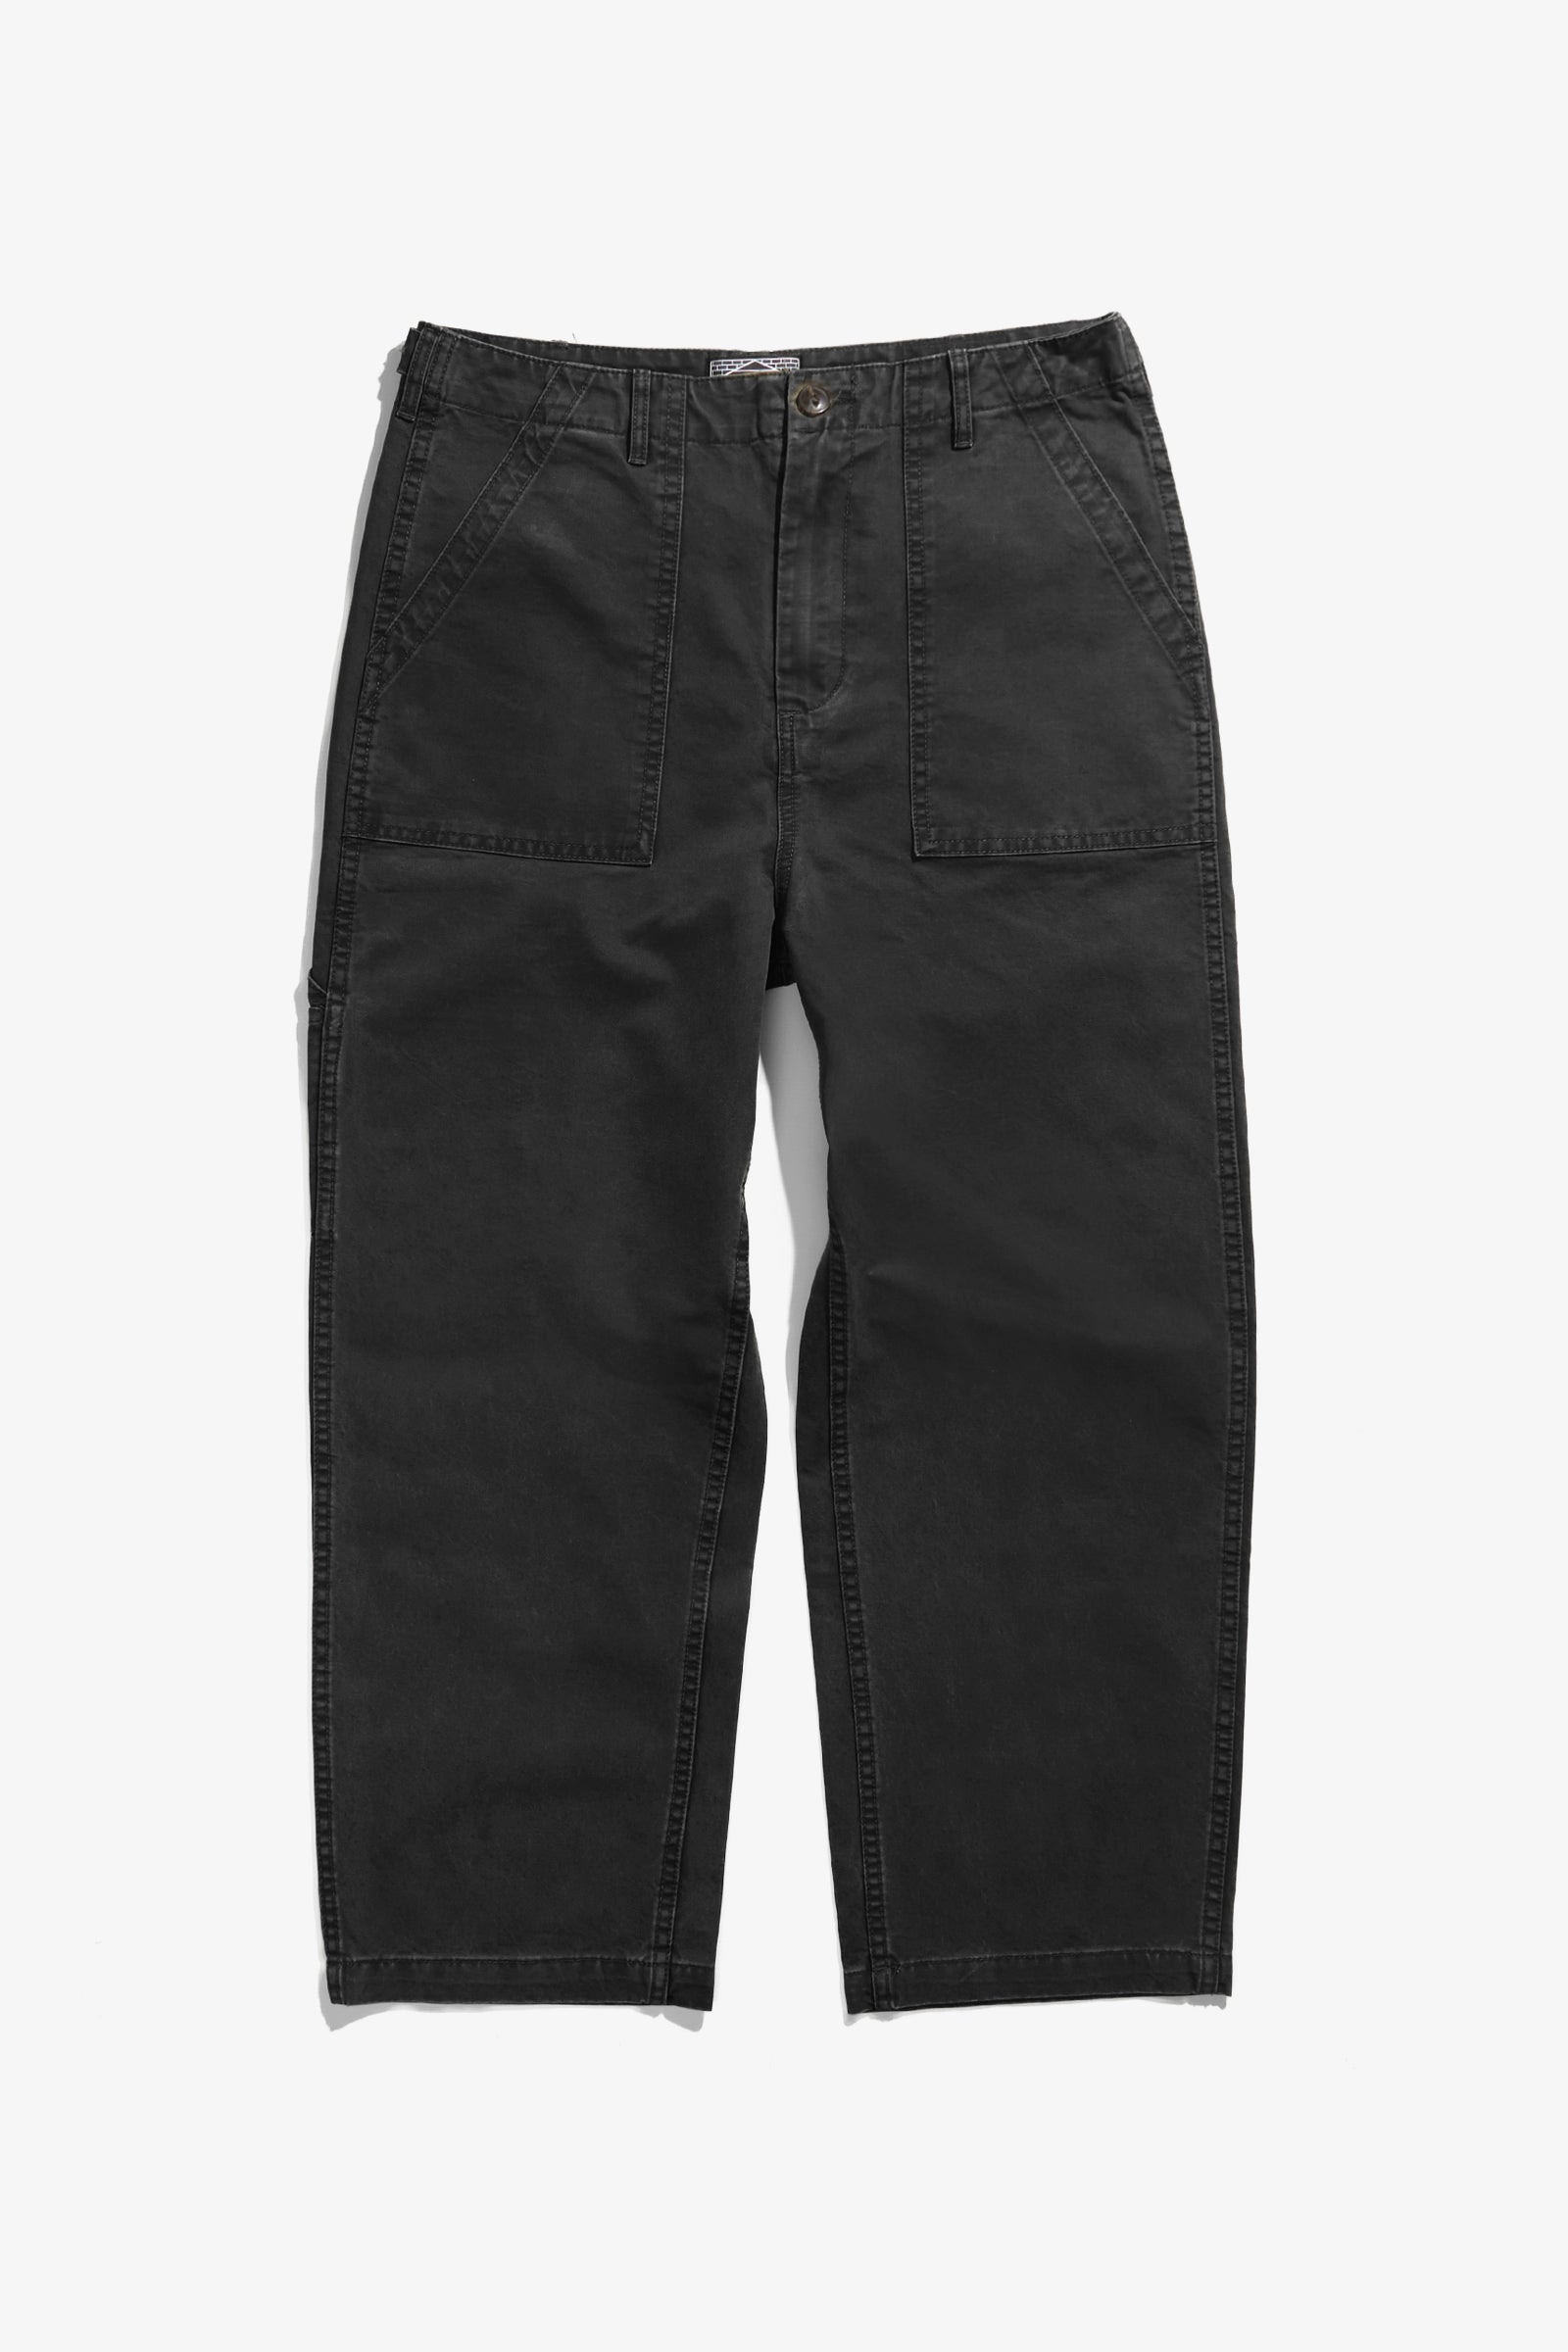 Blacksmith - Sowing Field Pants - Black